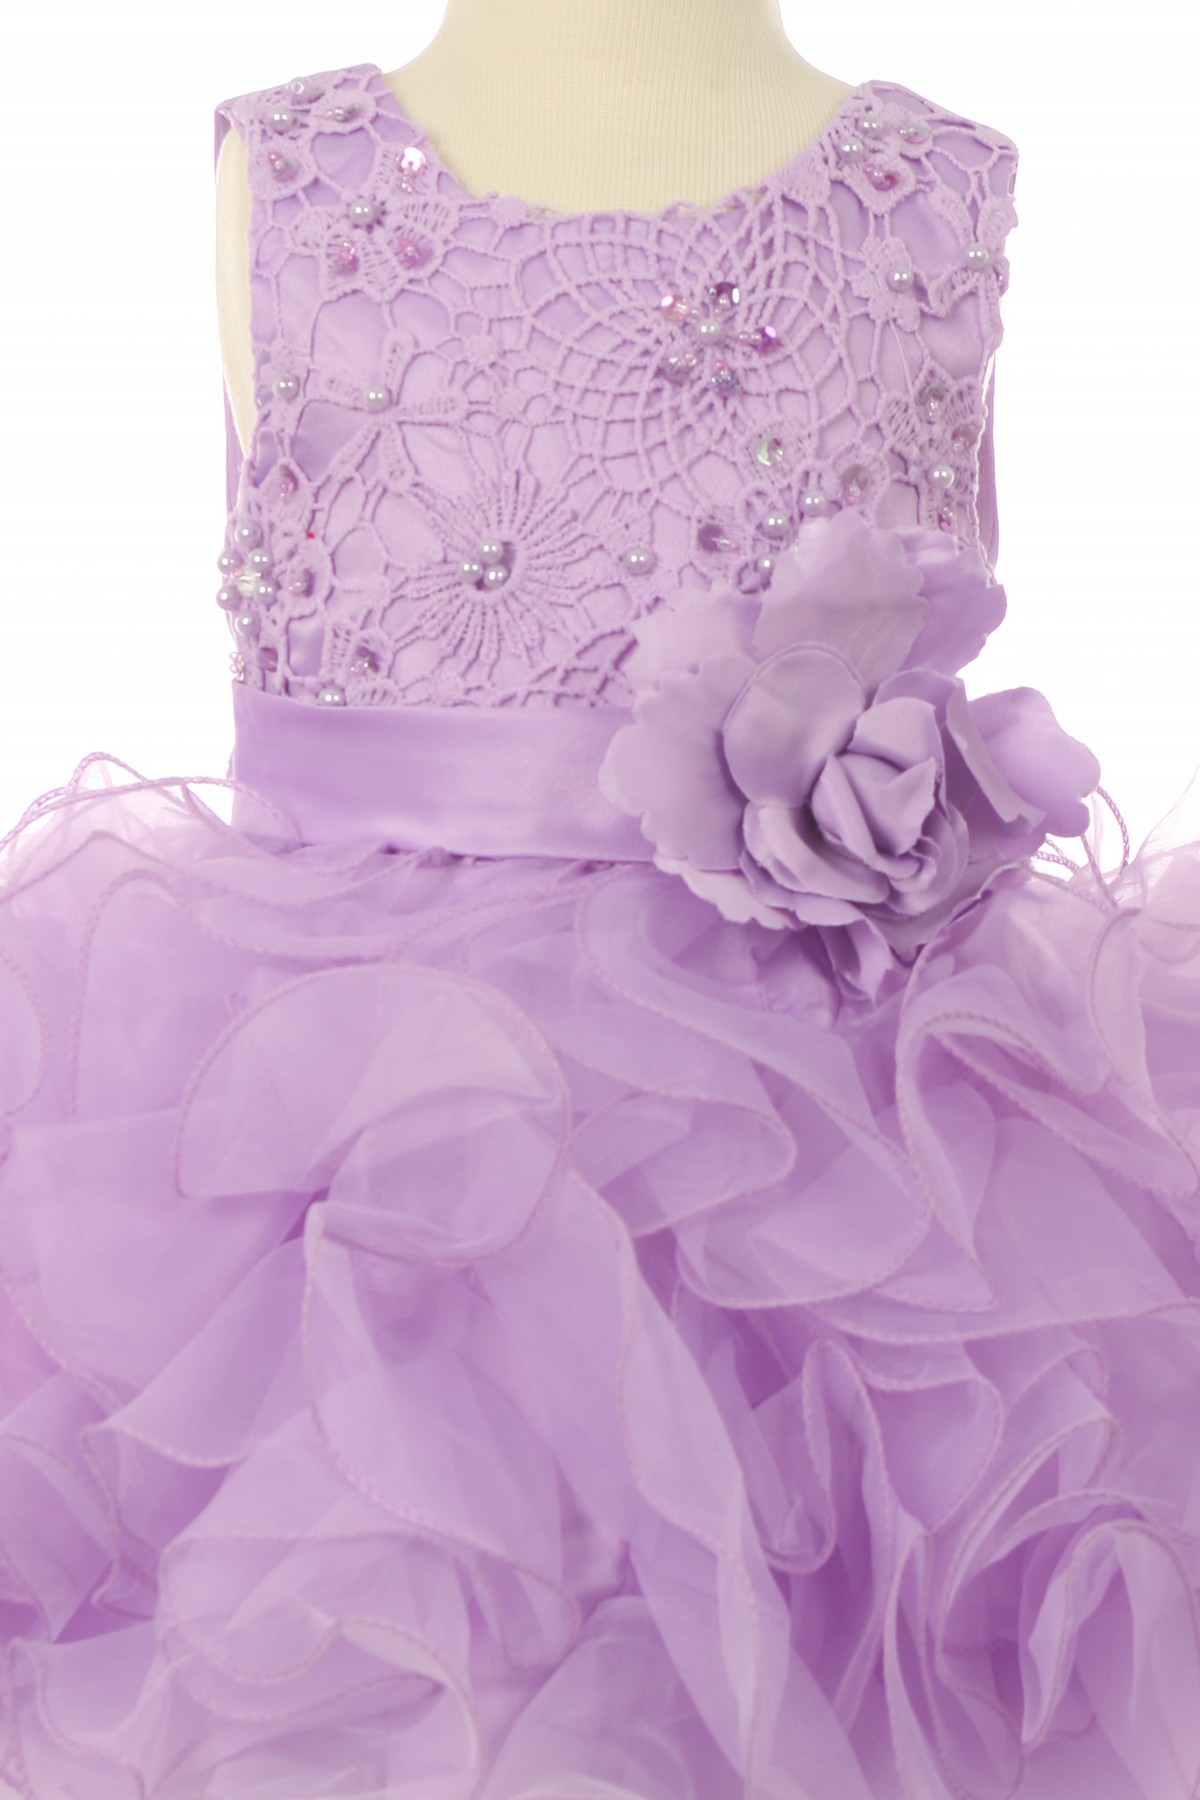 cupcake pageant dress